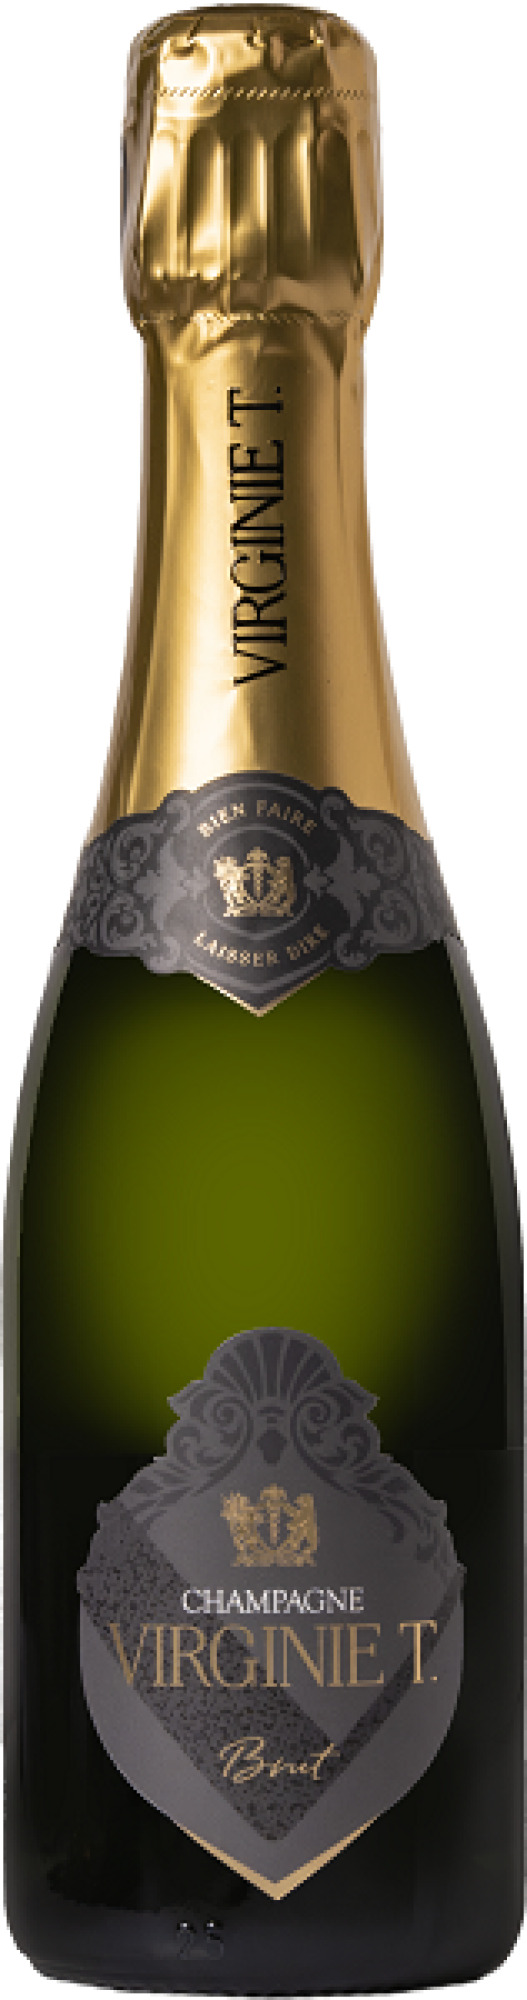 VIRGINIE T. Brut Champagne AOC